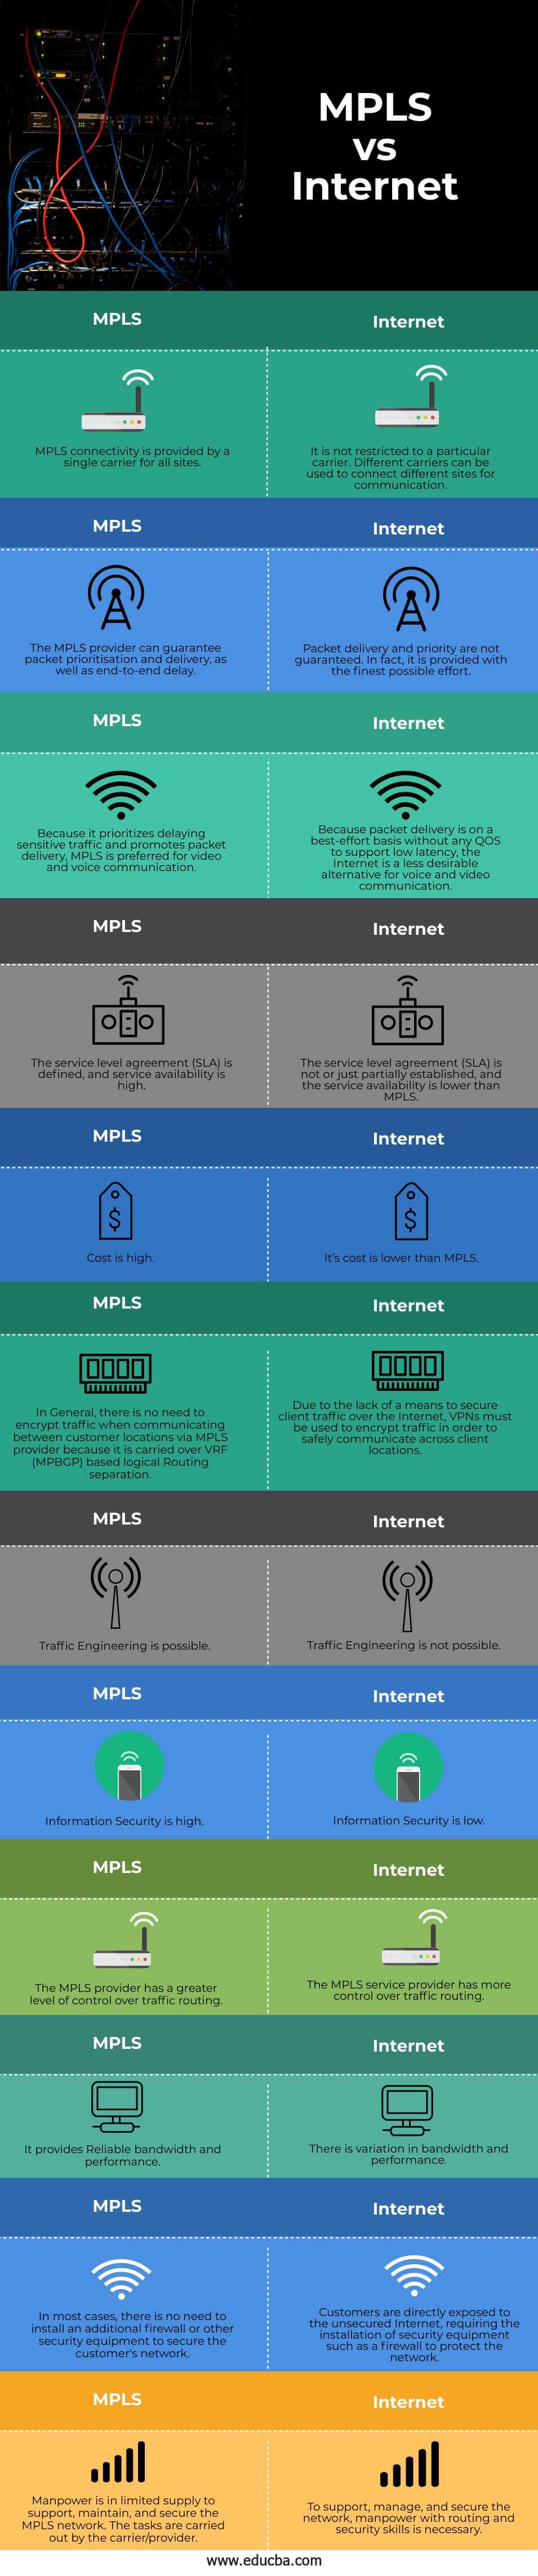 MPLS-vs-Internet-info